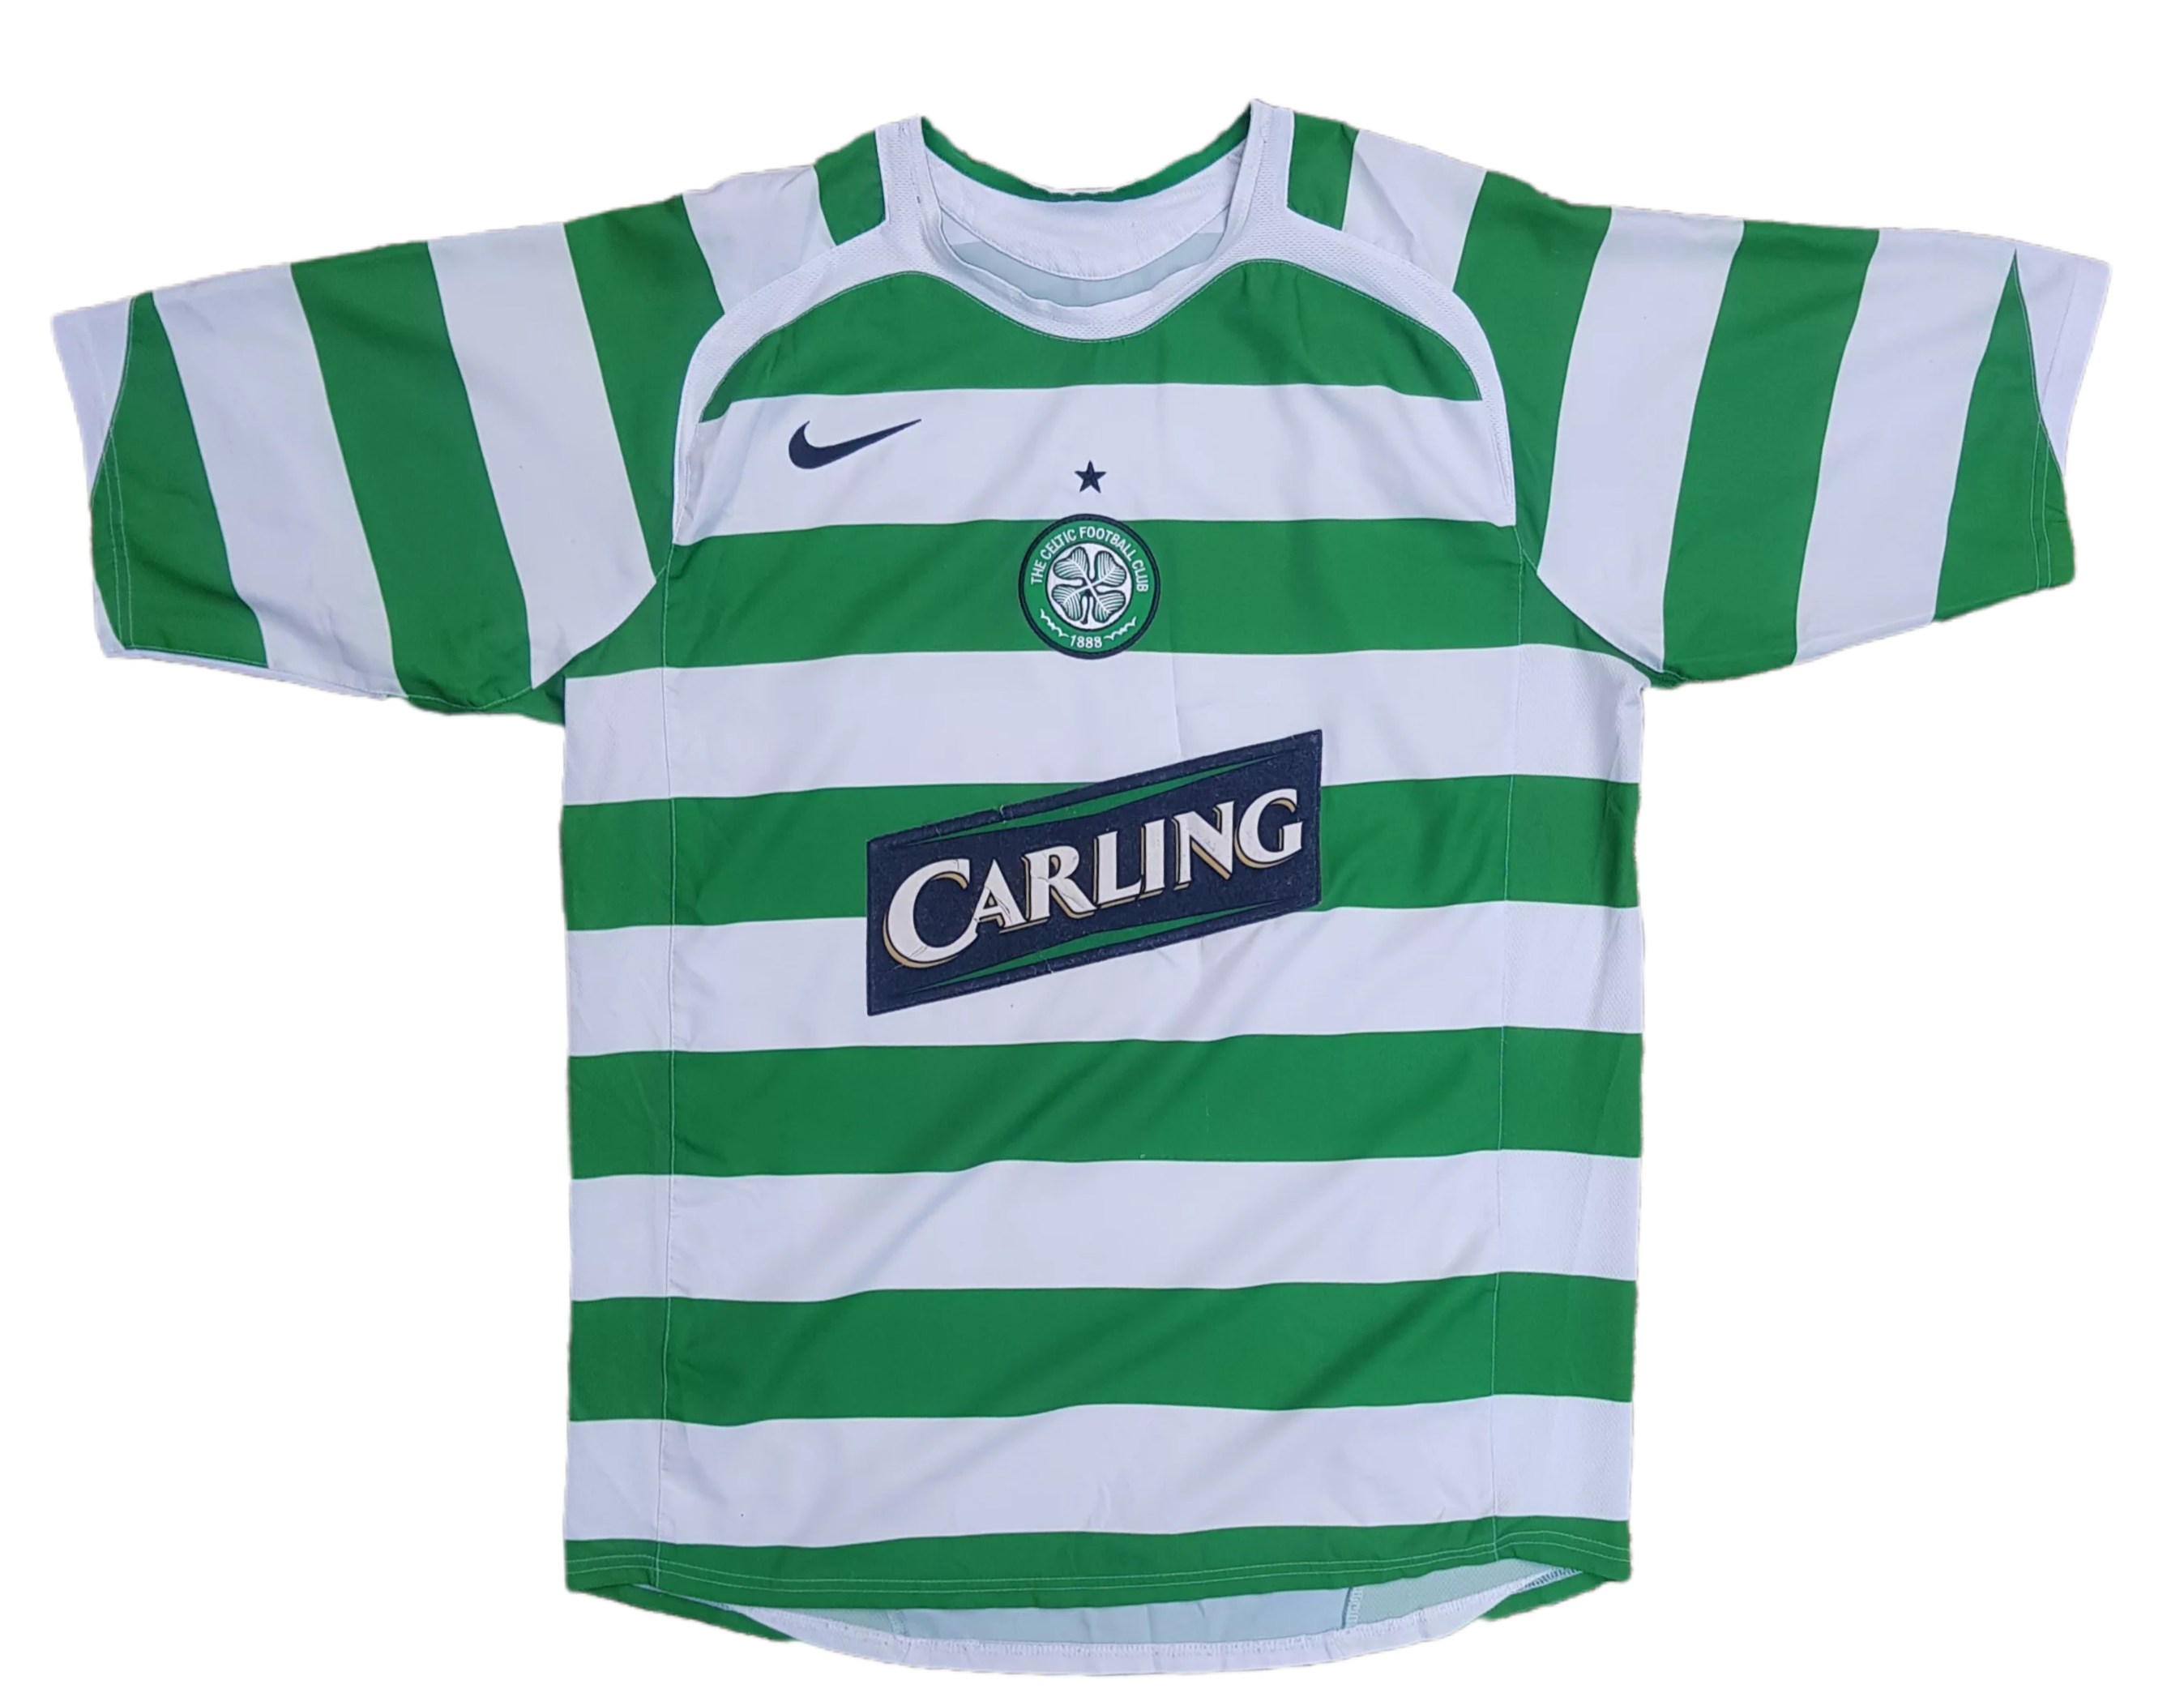 Celtic Cup Shirt football shirt 2006 - 2008. Sponsored by Carling